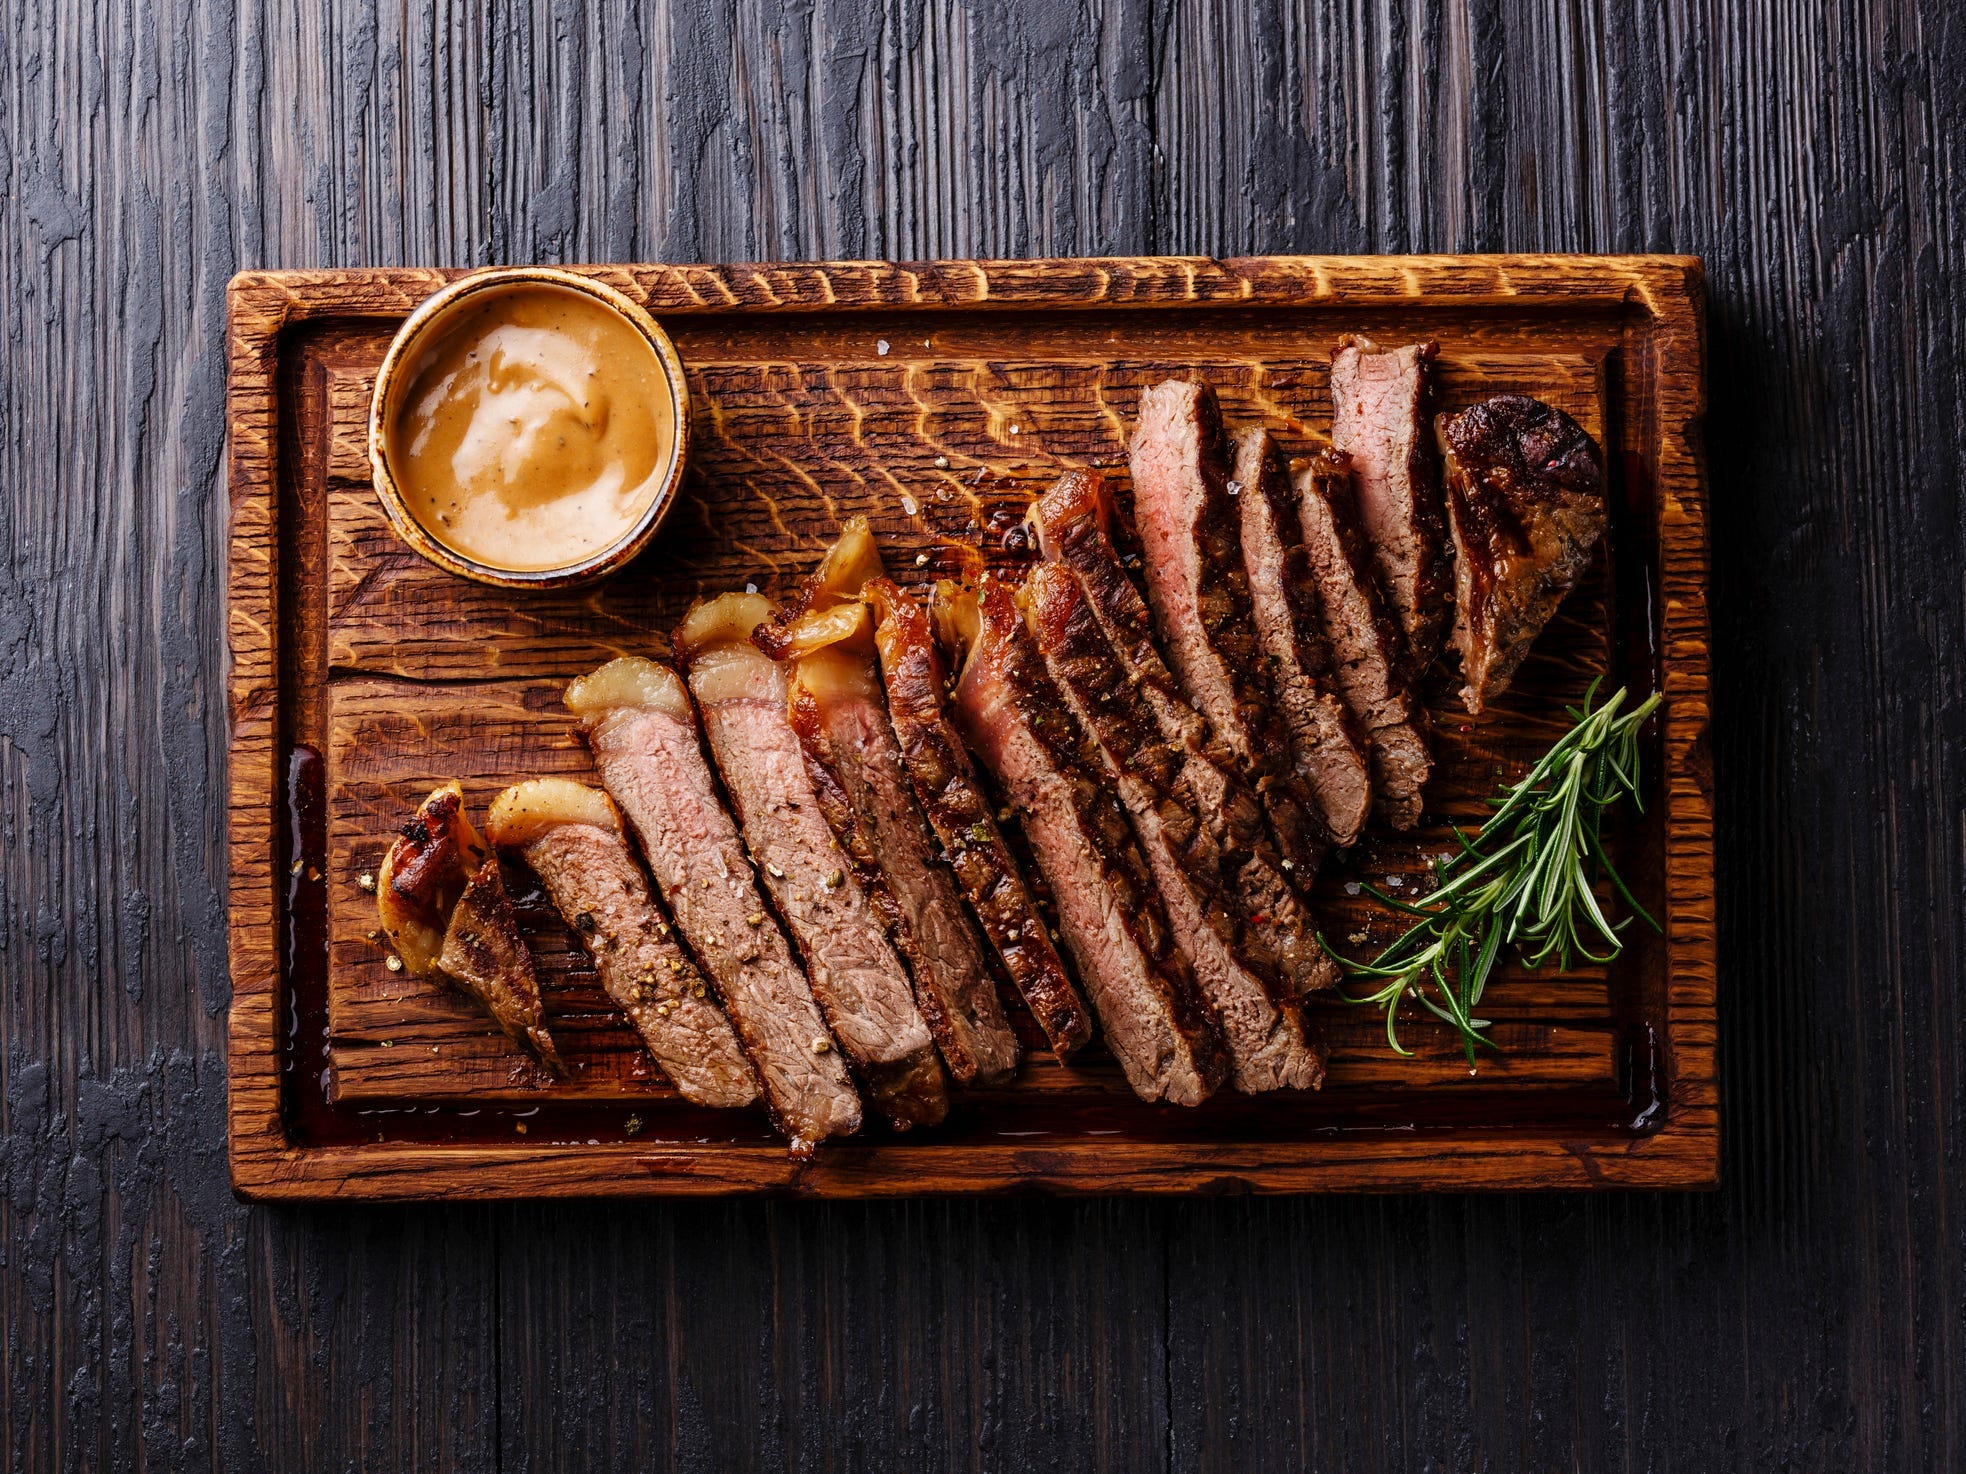 Well-done steak sliced on a cutting board